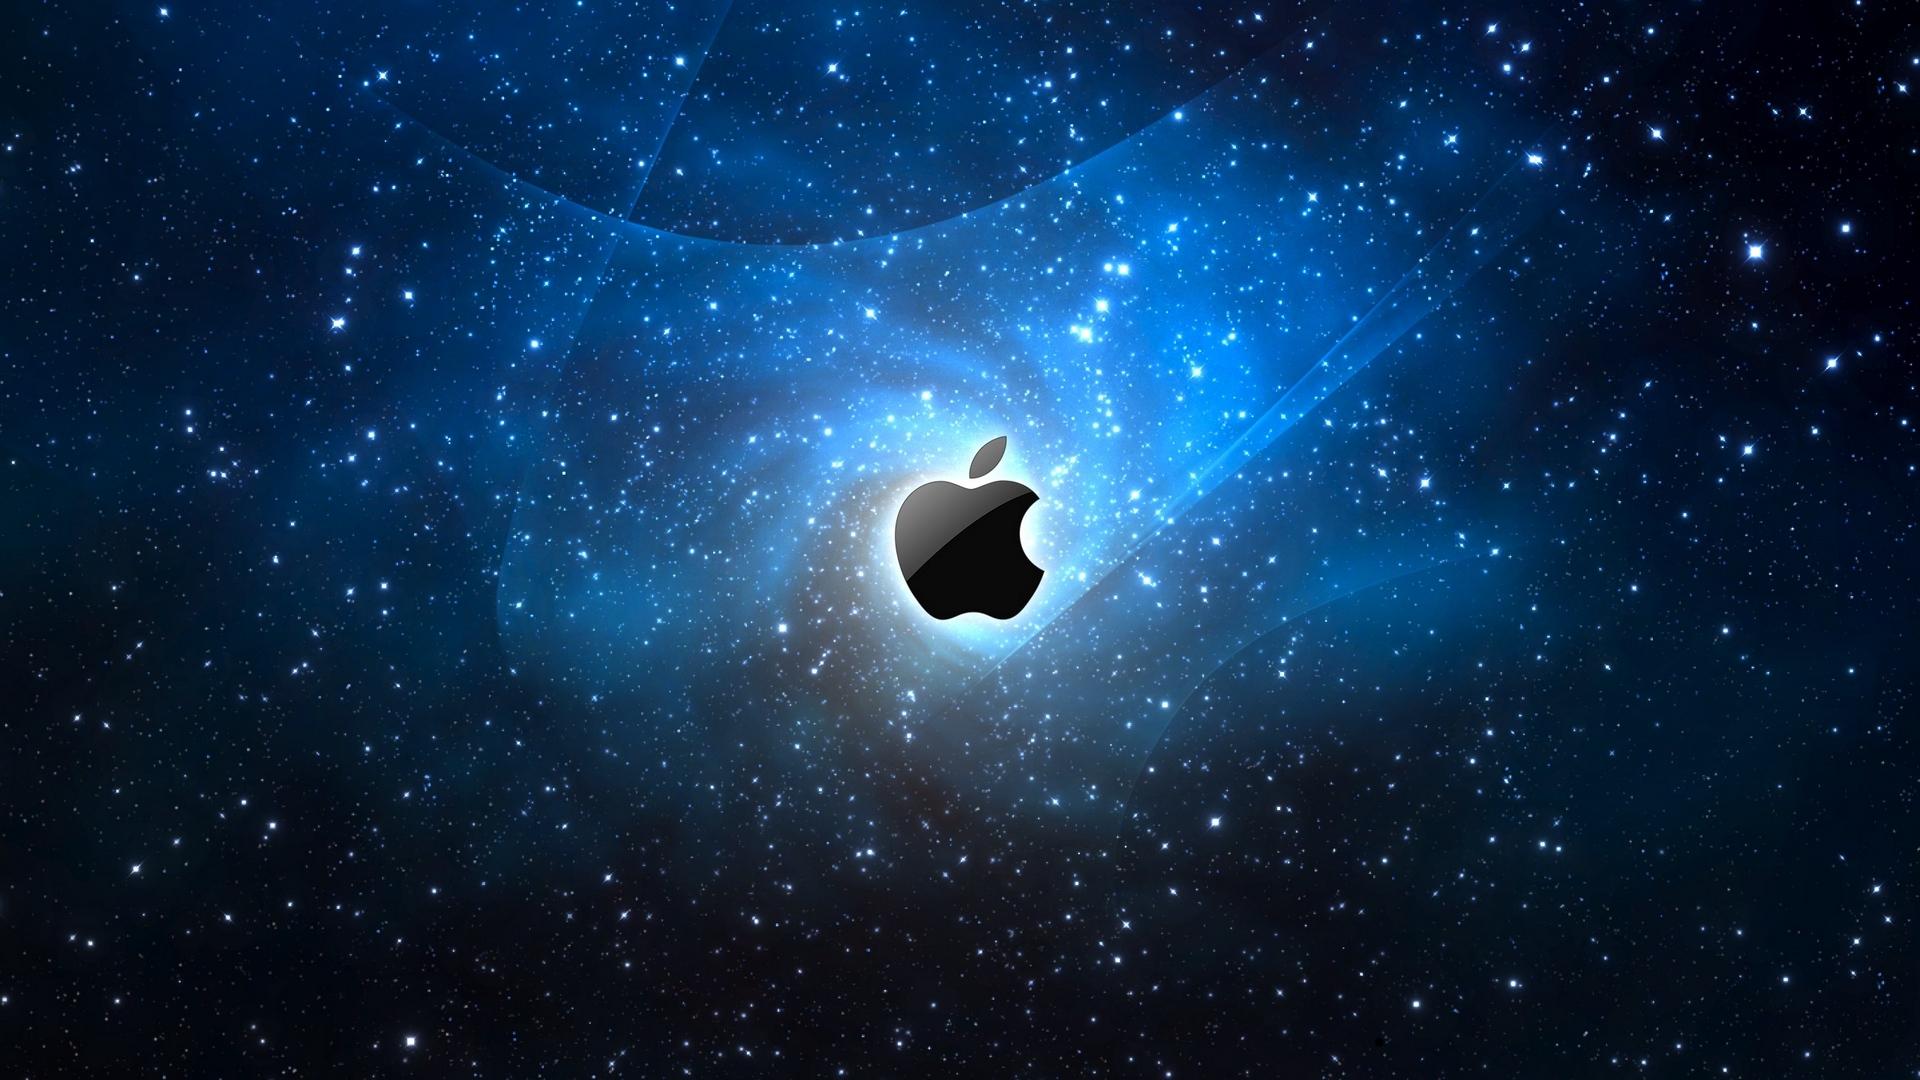 Stars Space and Apple Mac Brand Logo Wallpaper